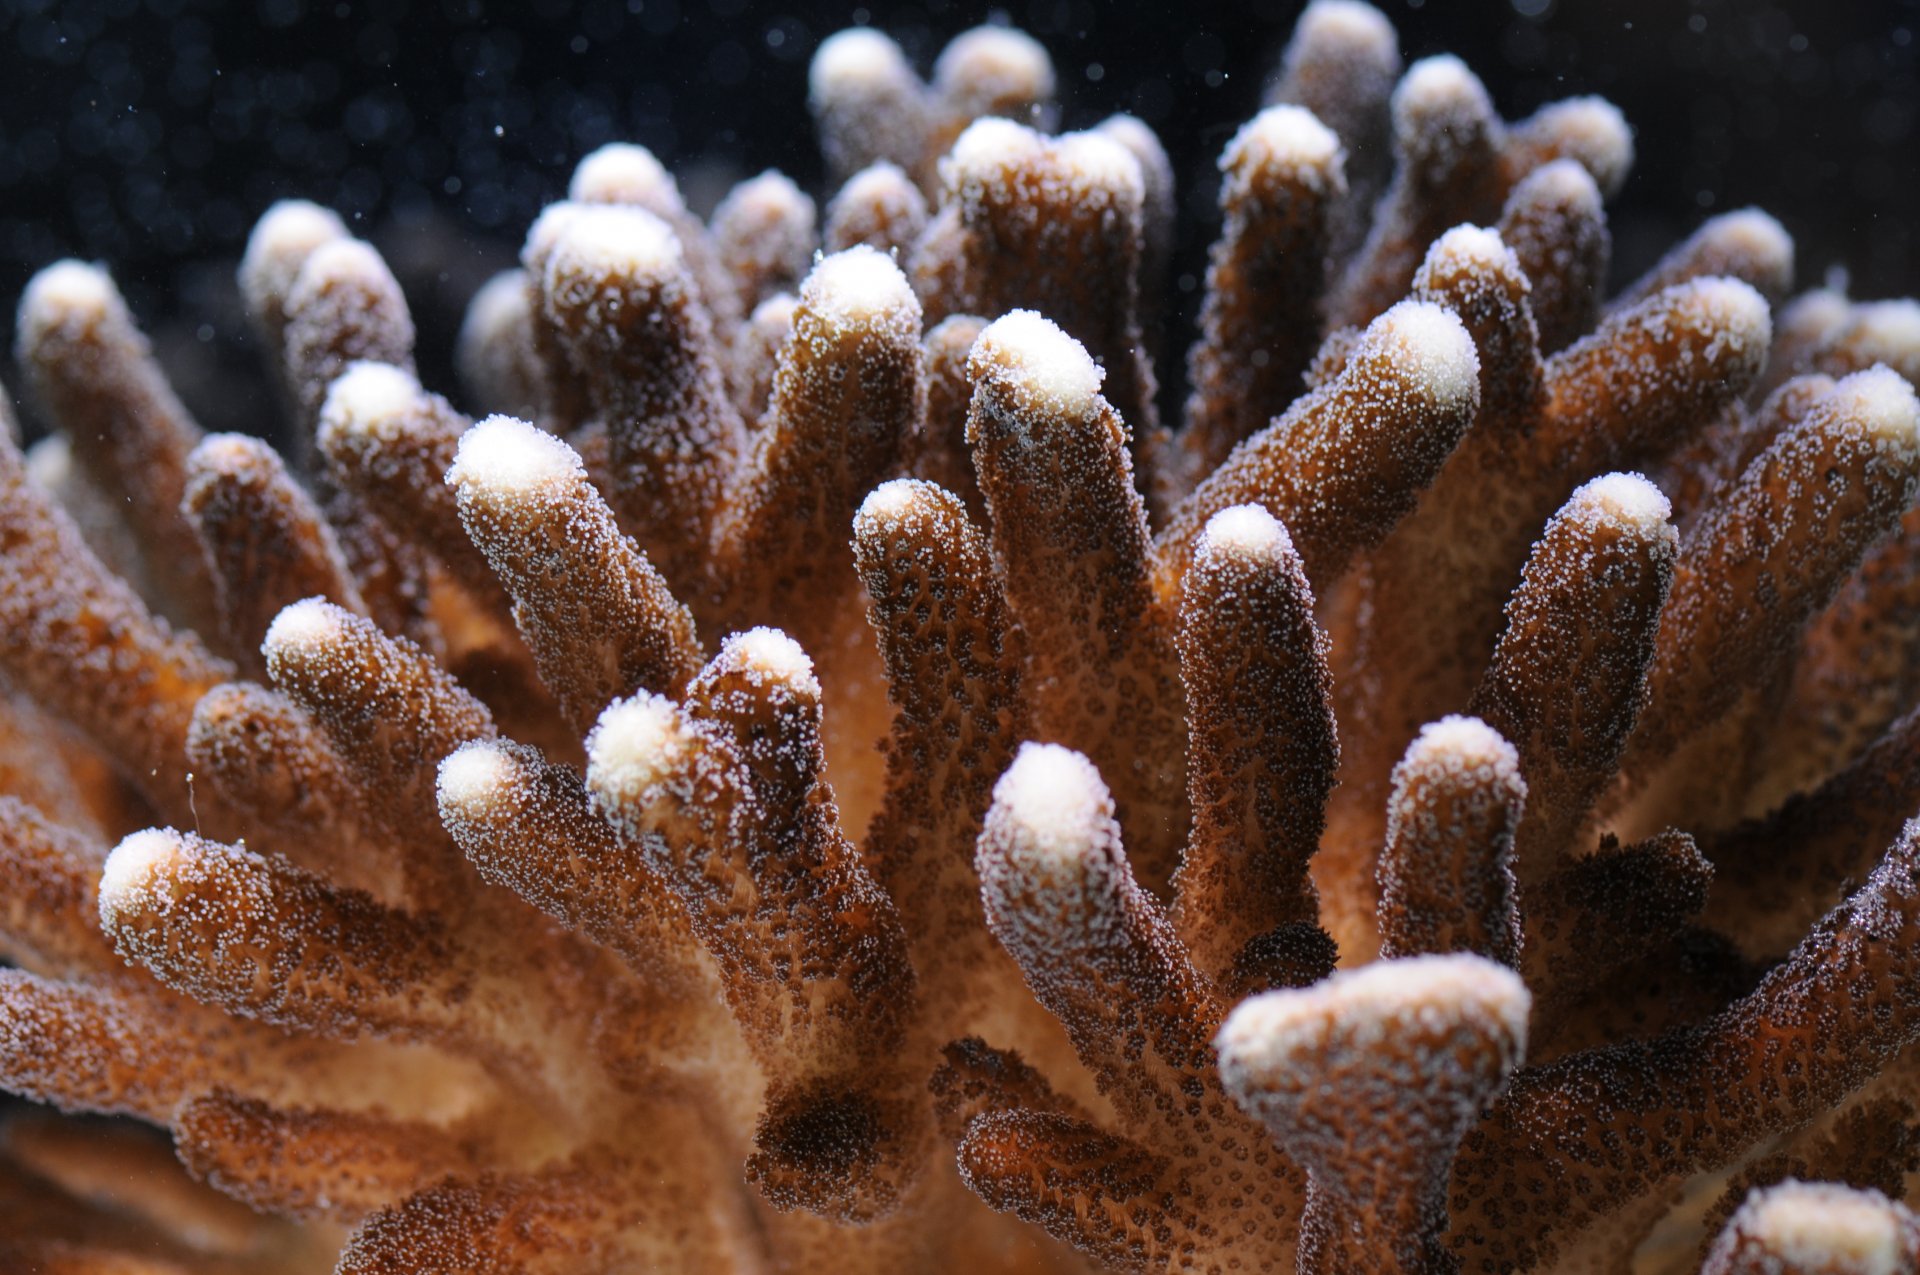 The coral Stylophora pistillata, also called Smooth Cauliflower Coral